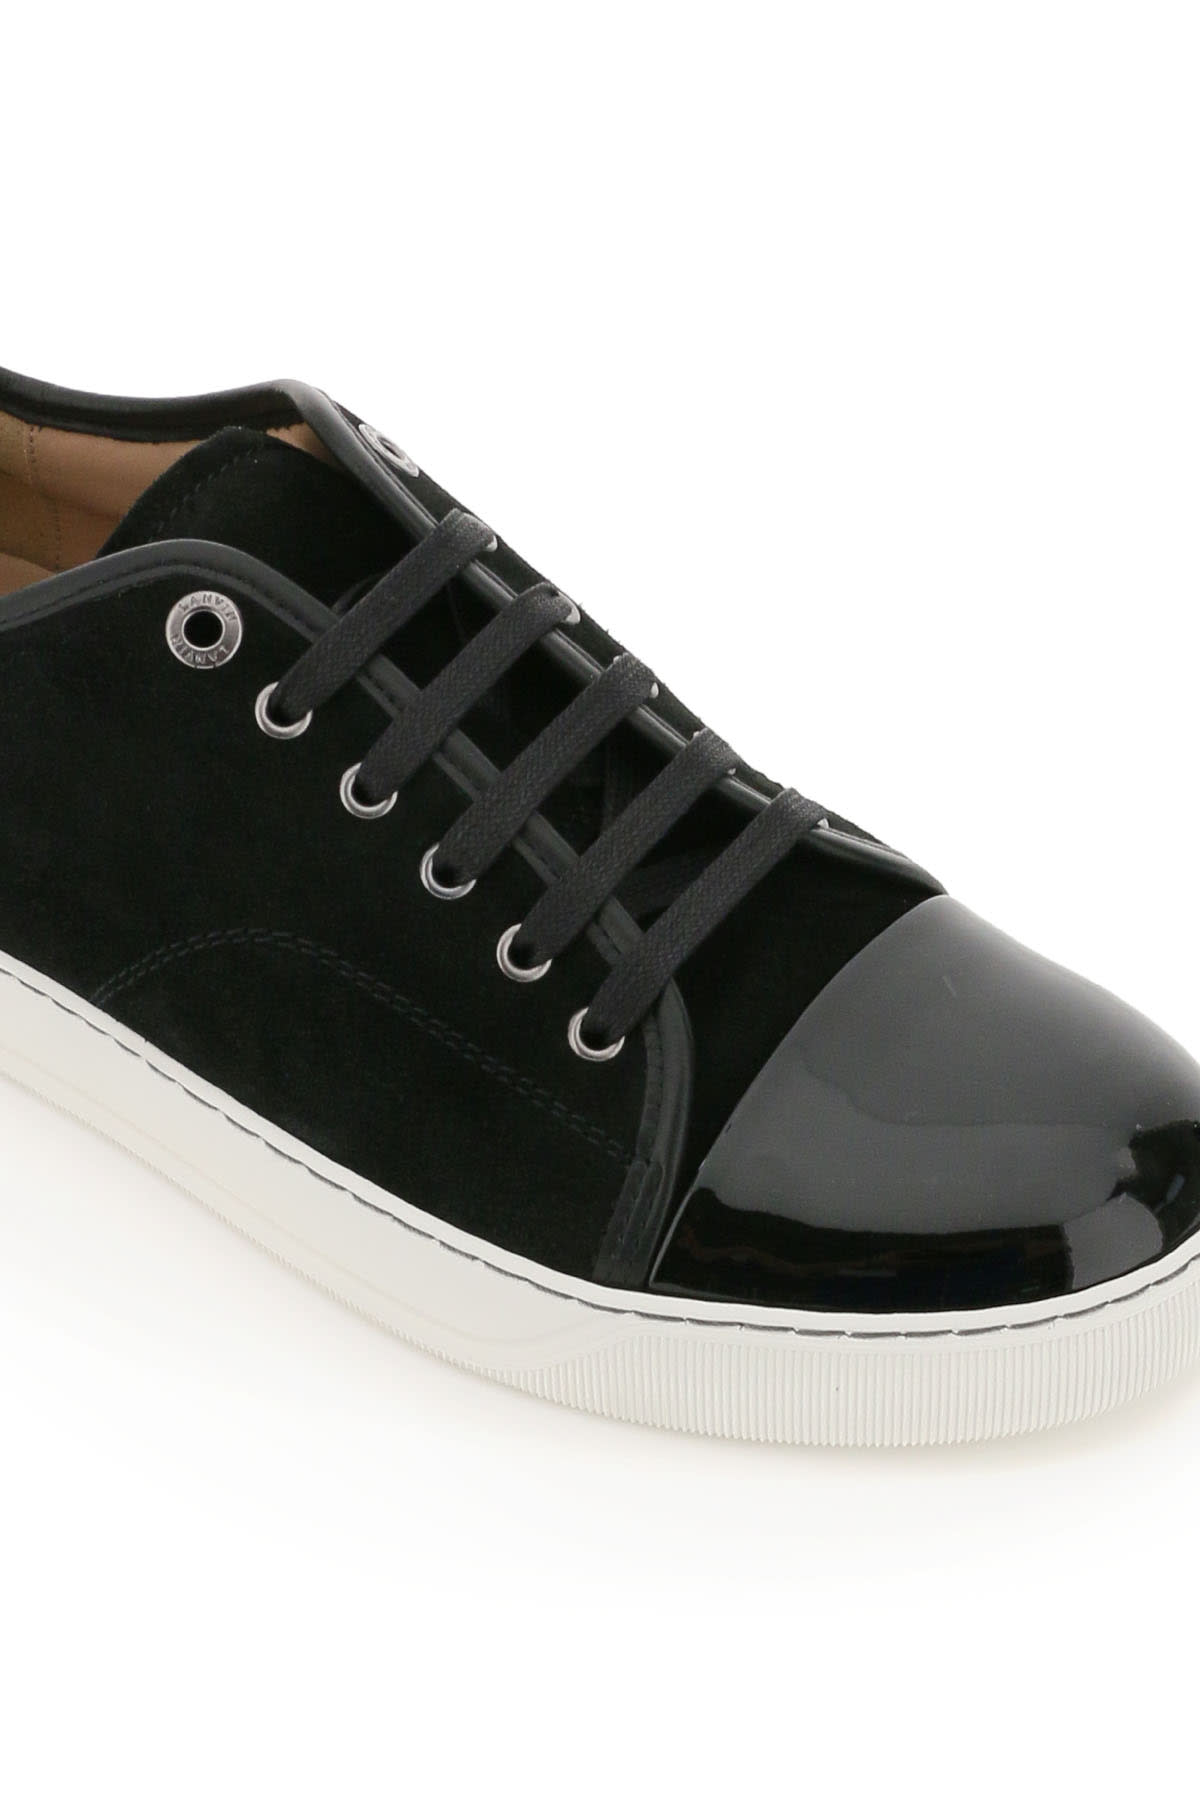 Shop Lanvin Dbb1 Basket Sneakers In Black